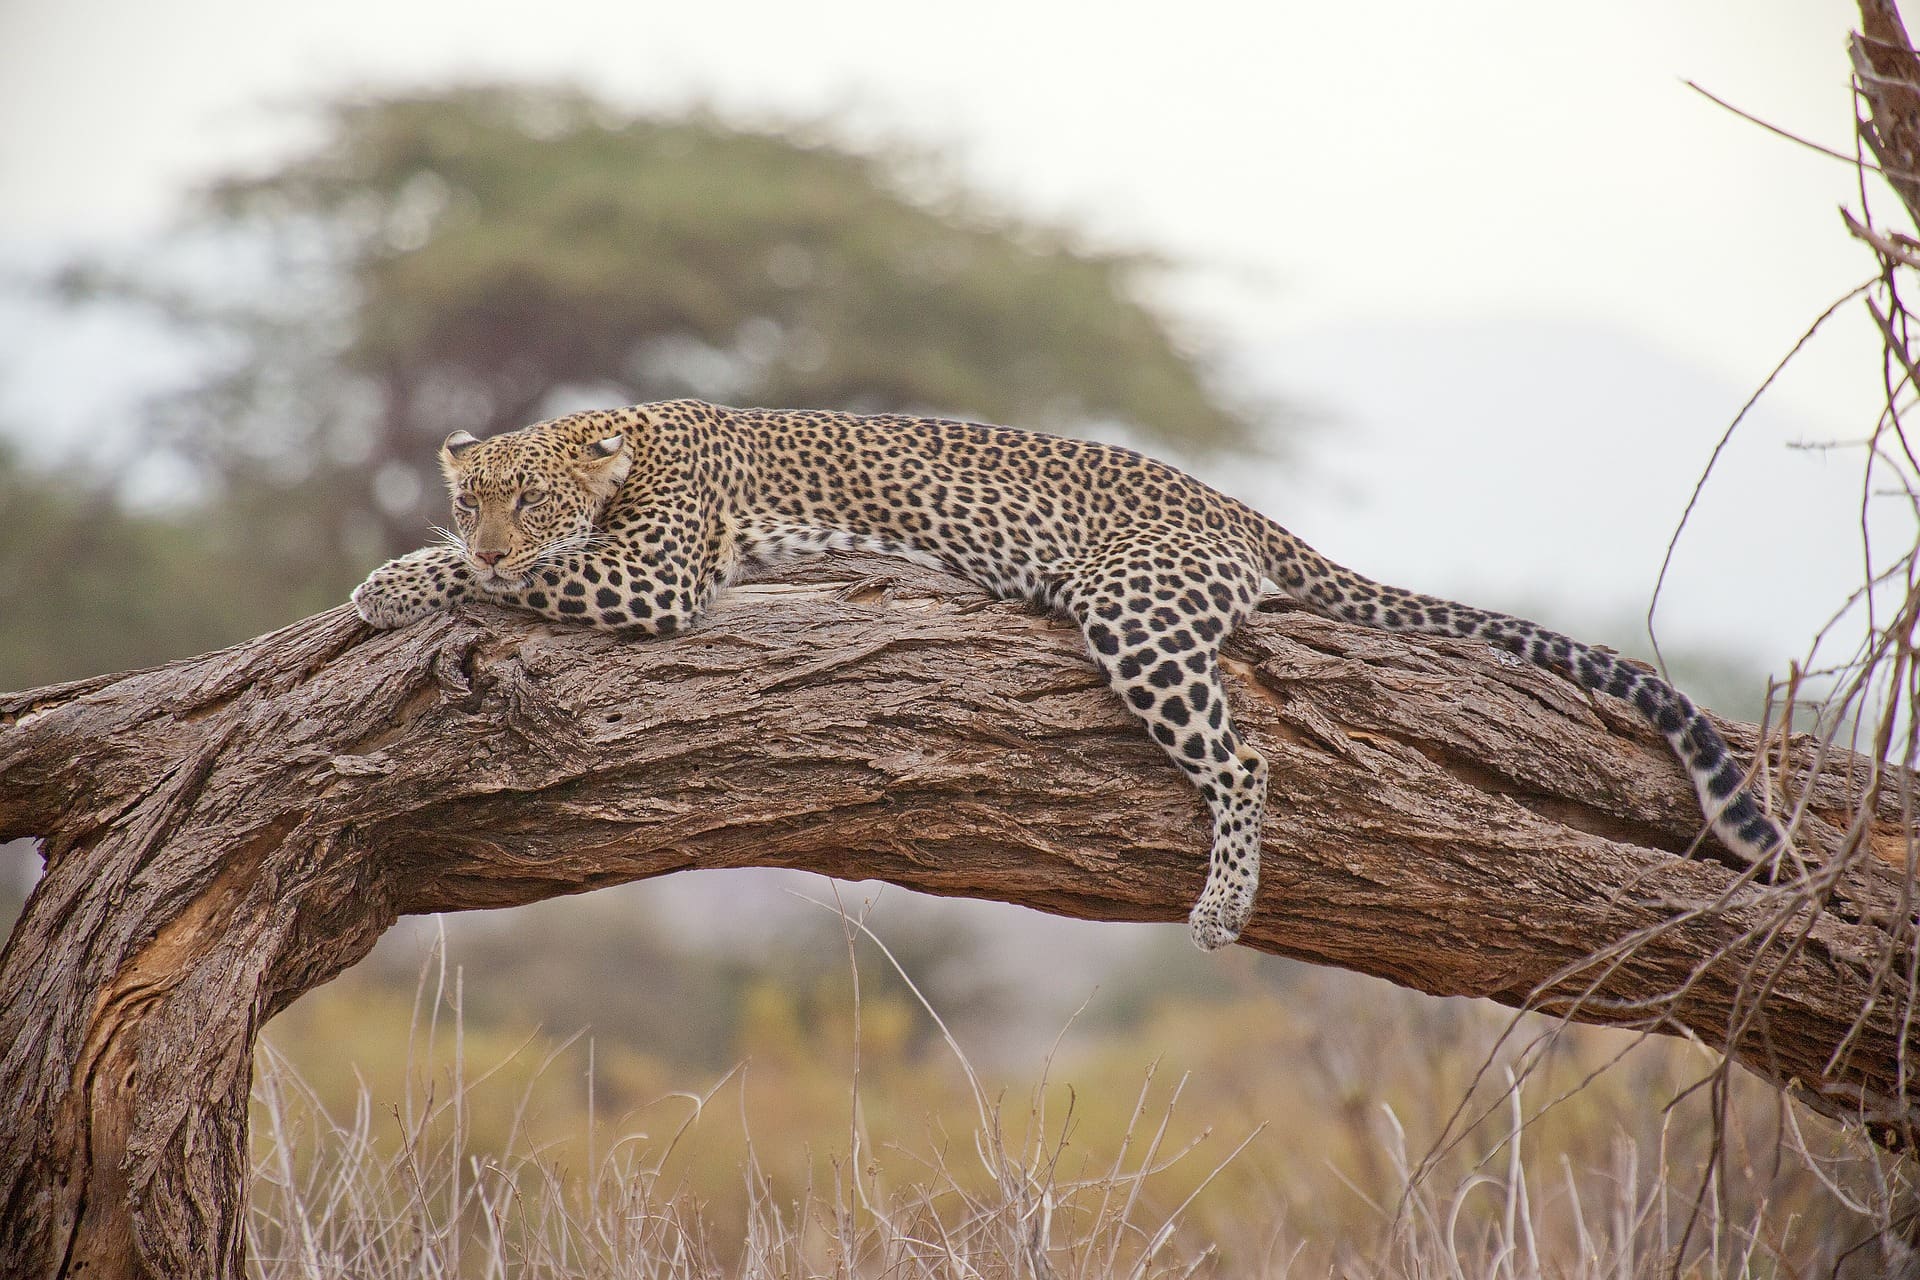 An African leopard resting on a fallen tree trunk in Gorongosa National Park